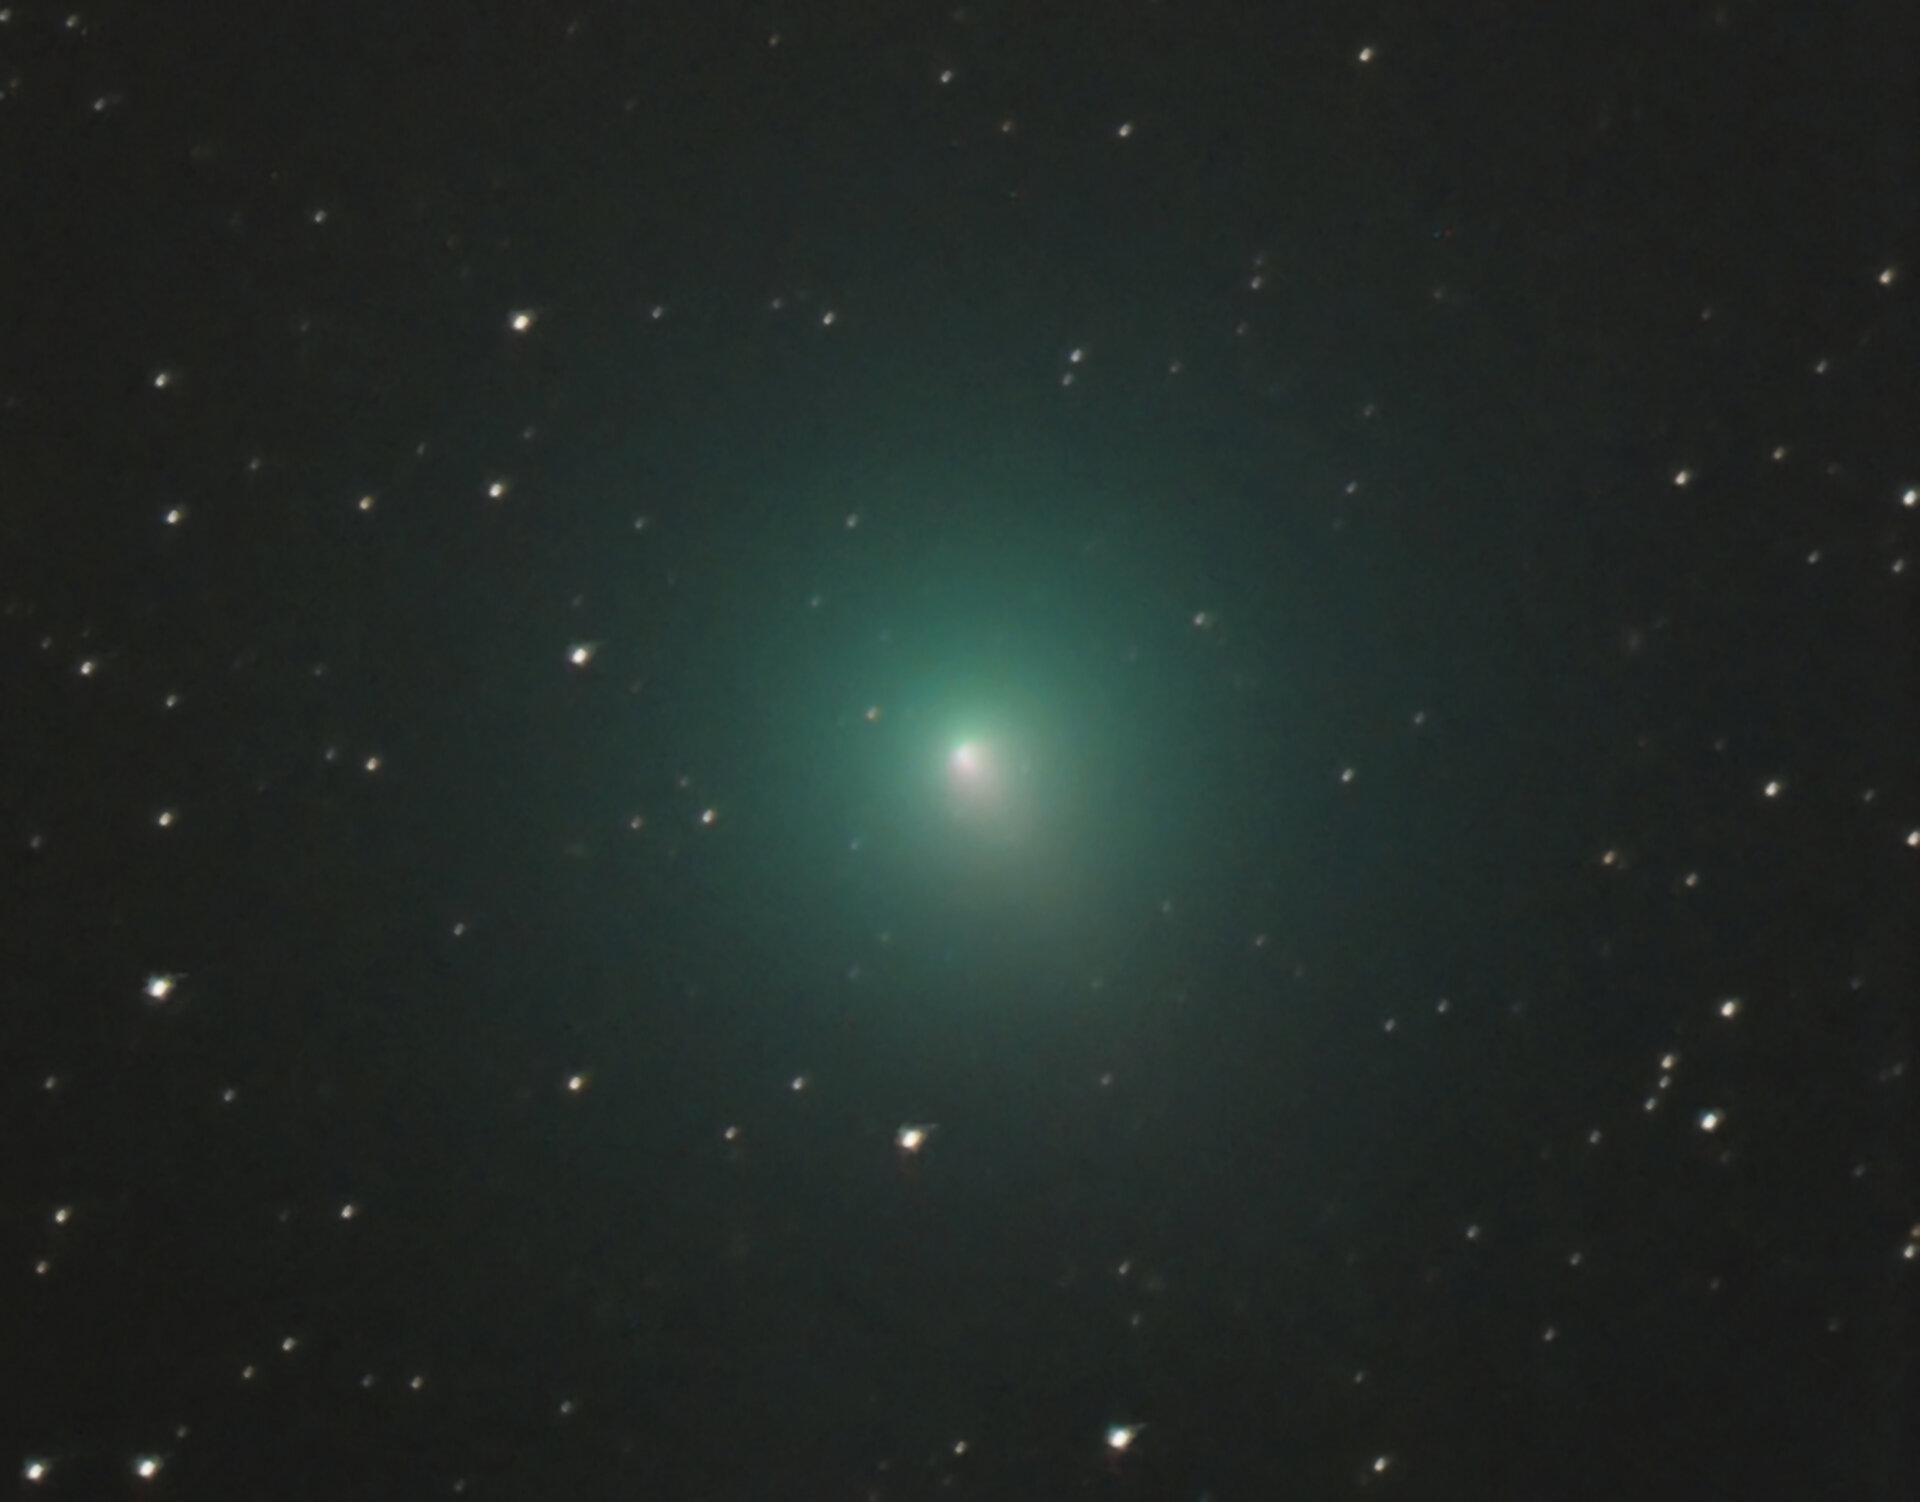 Comet 46P/Wirtanen from La Palma